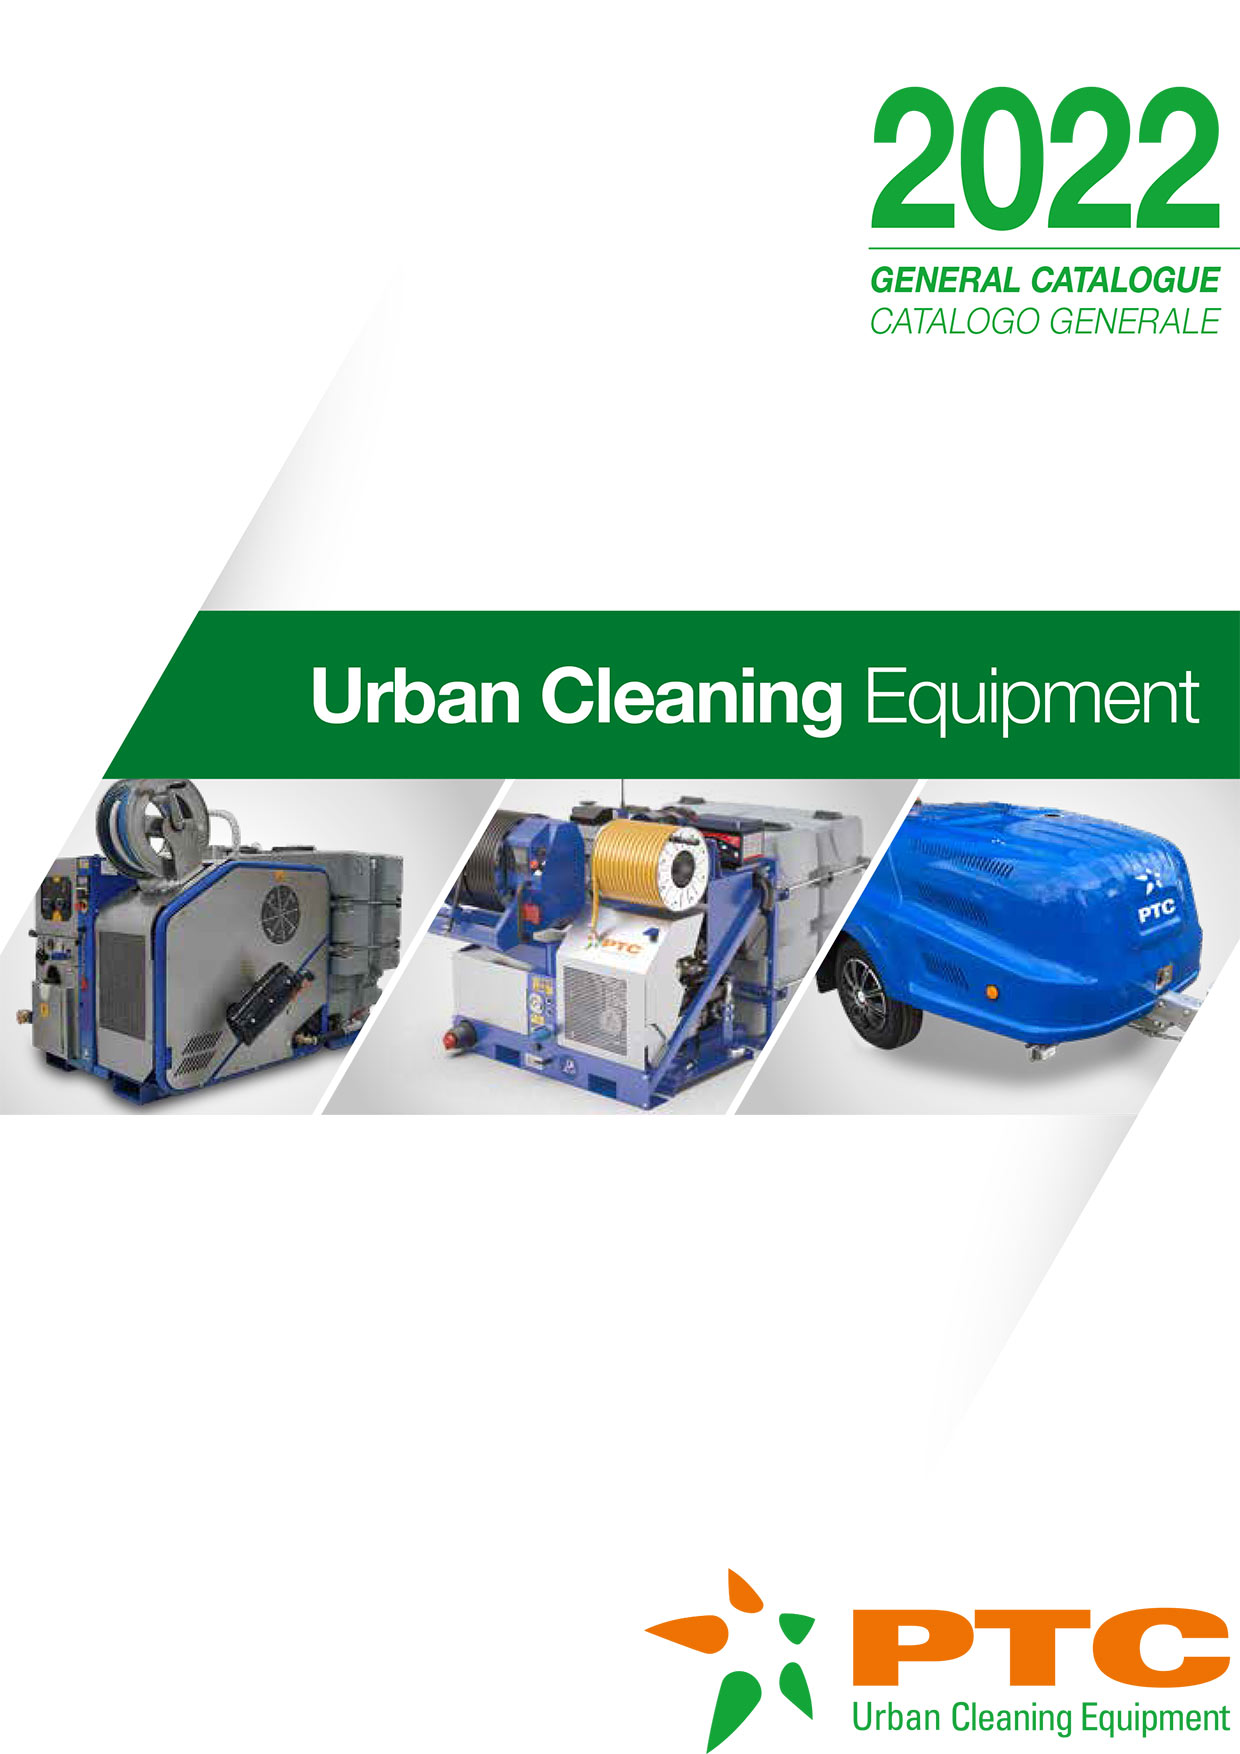 Catalogo Generale PTC Urban Cleaning